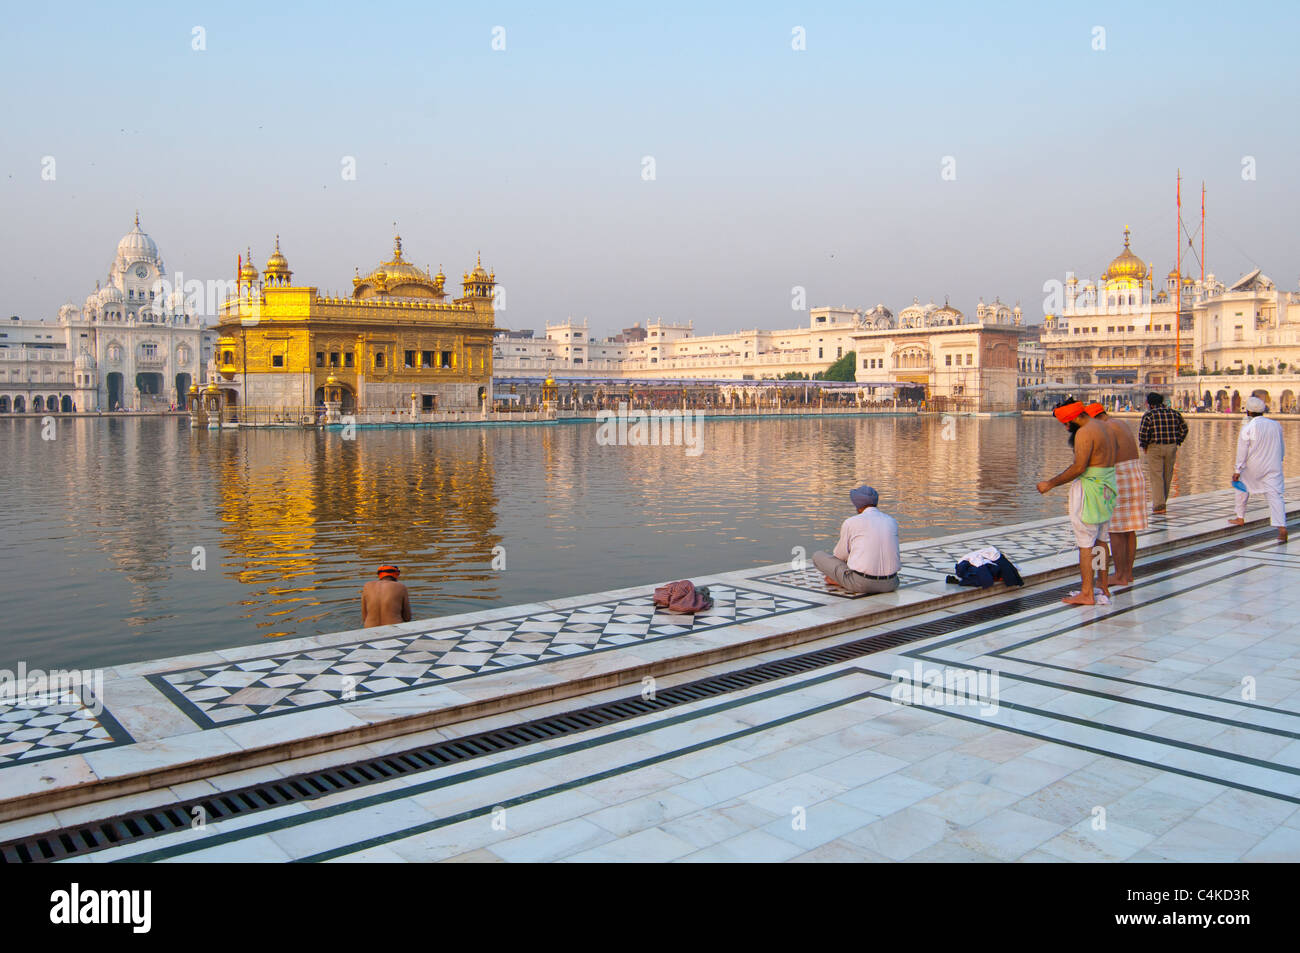 The Harmandir Sahib (The abode of God) or Darbar Sahib also referred to as the Golden Temple, Amritsar, Punjab, India, Asia Stock Photo